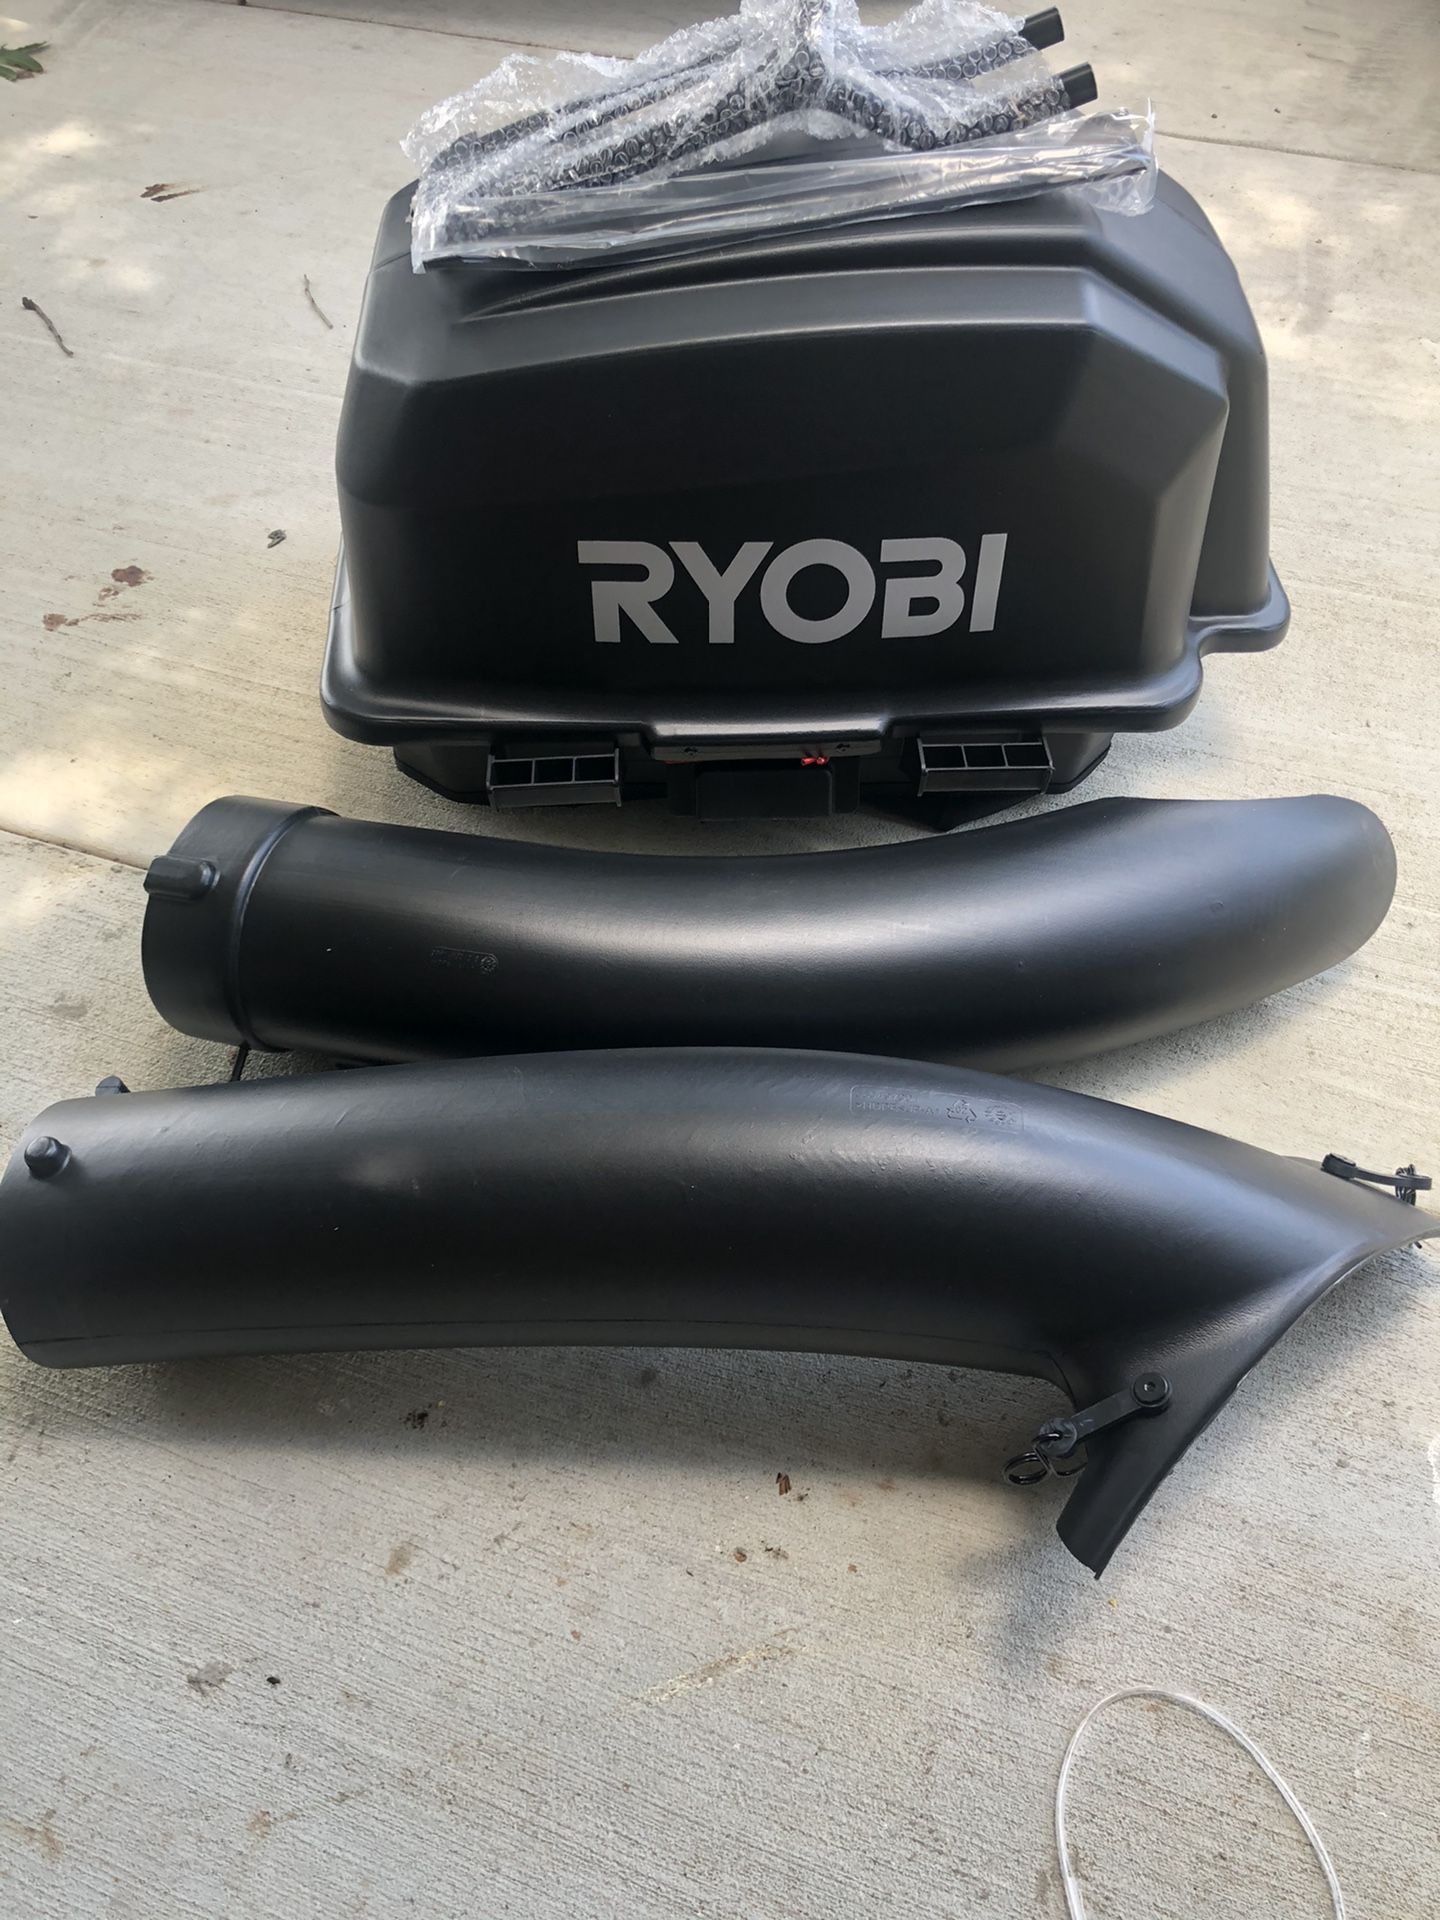 RYOBI Bagger for Zero Turn Riding Mower